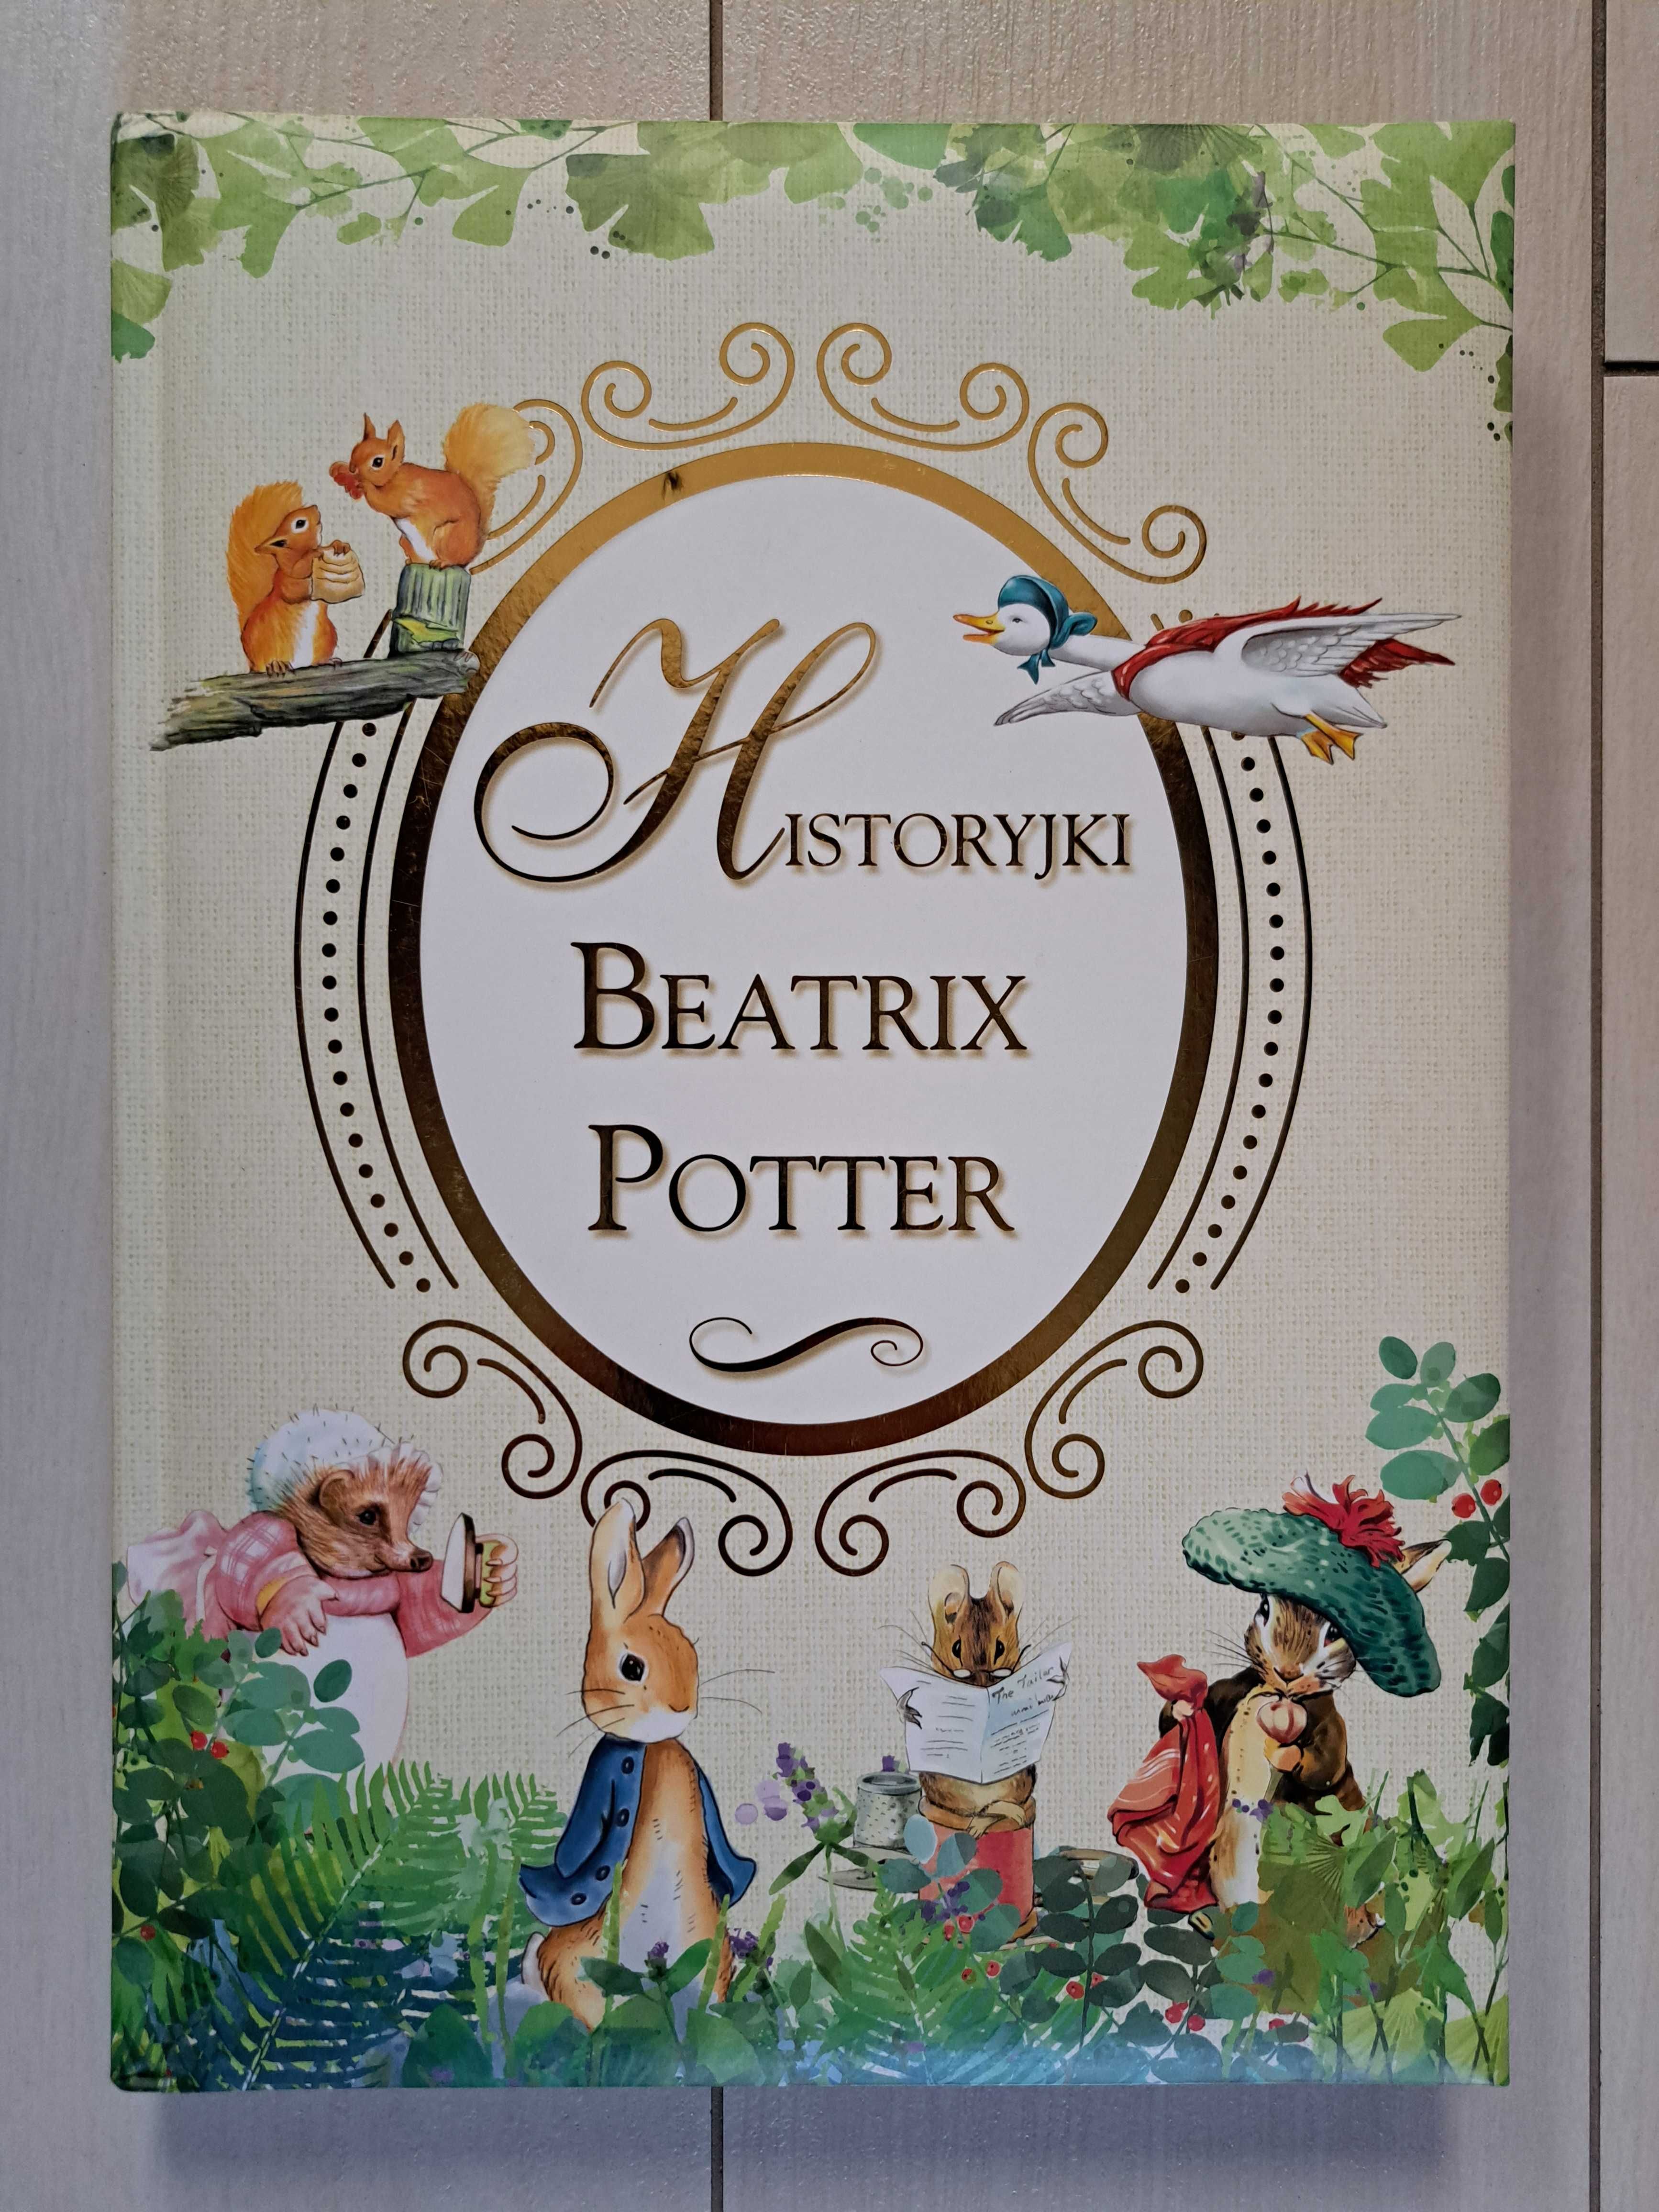 Historyjki Beatrix Potter - stan idealny, jak nowy